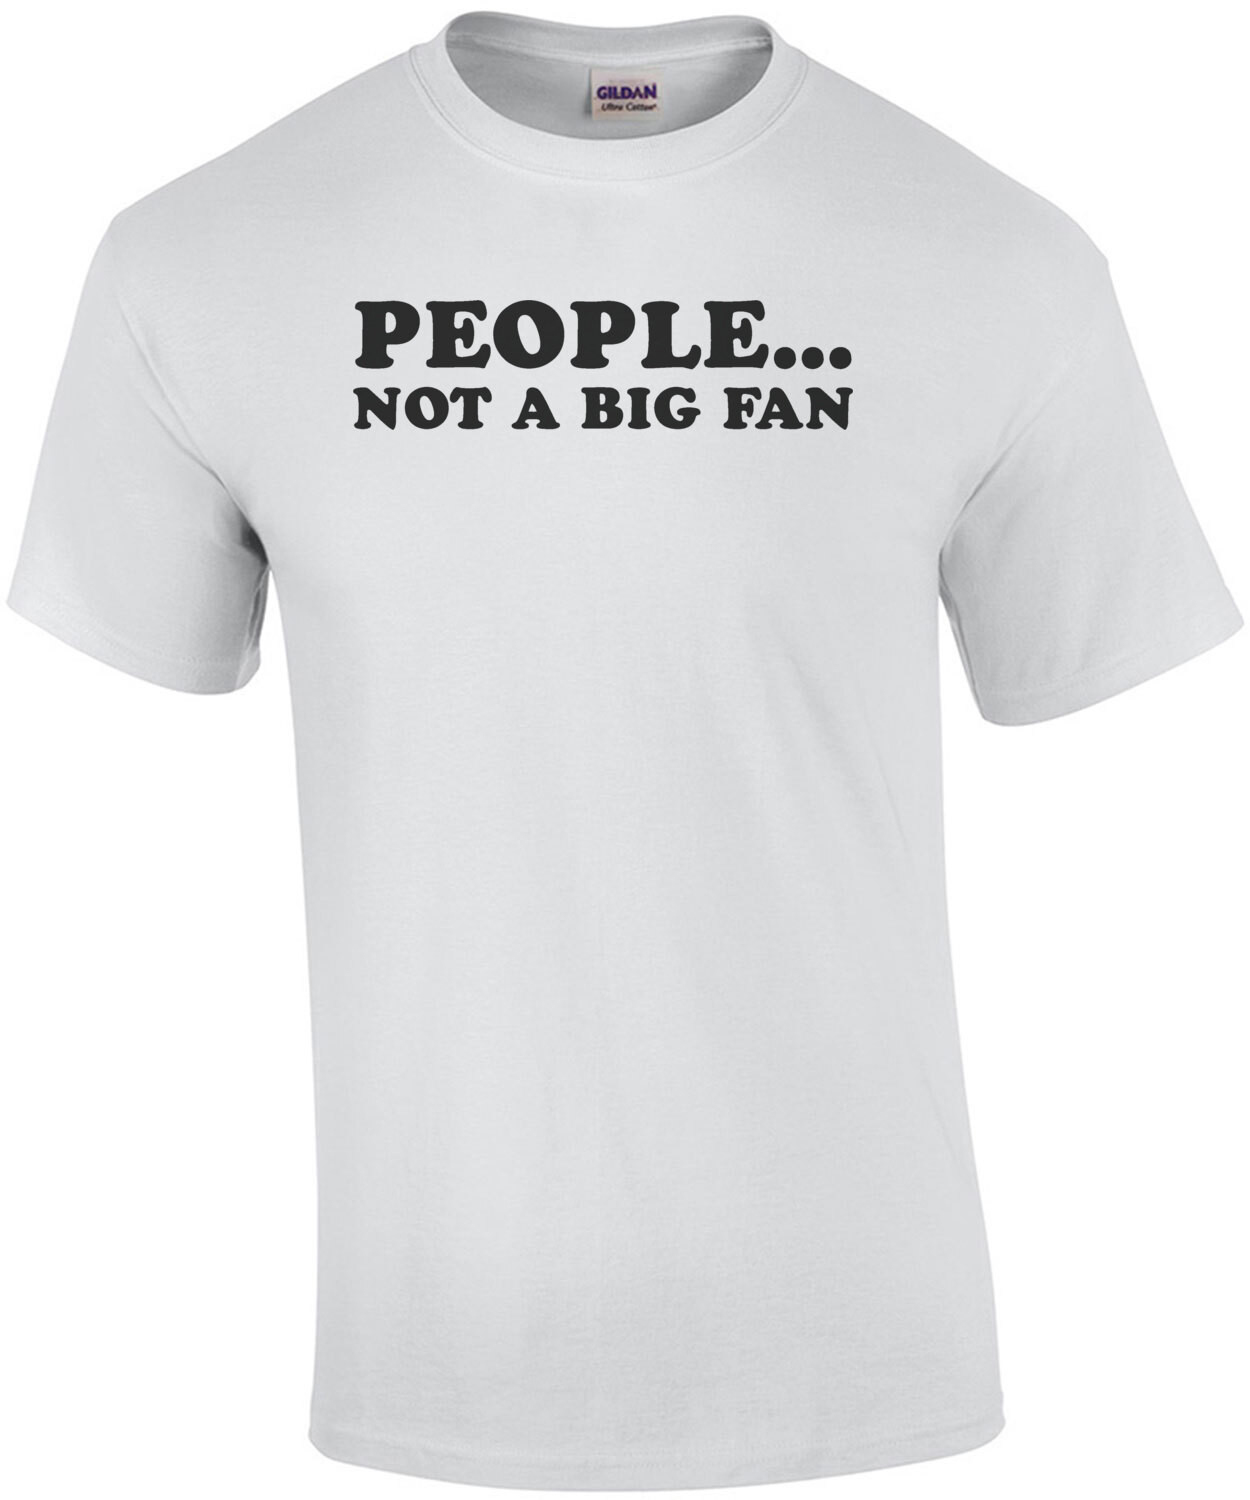 People... not a big fan - funny sarcastic t-shirt